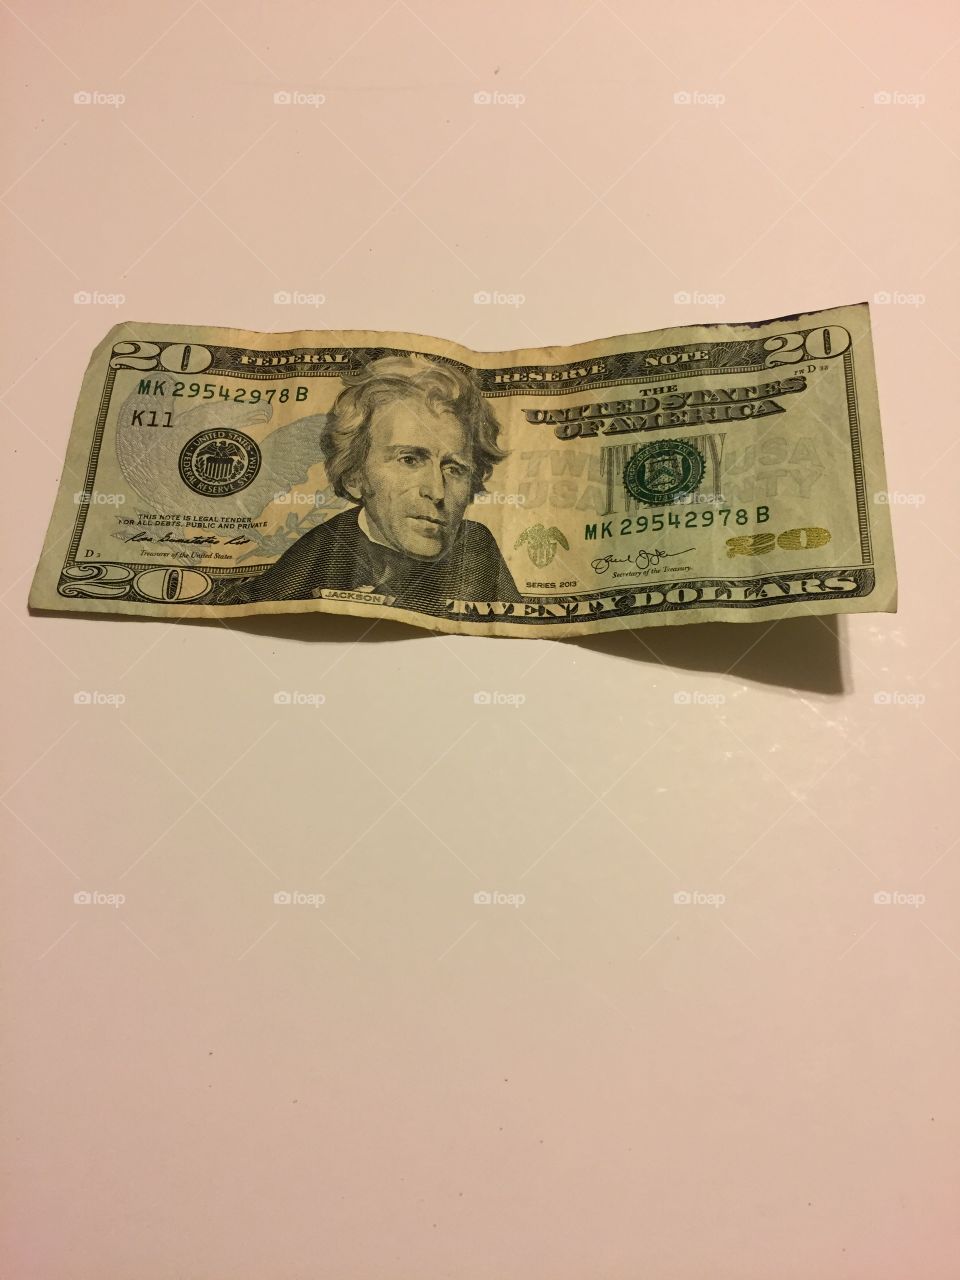 One $20 bill